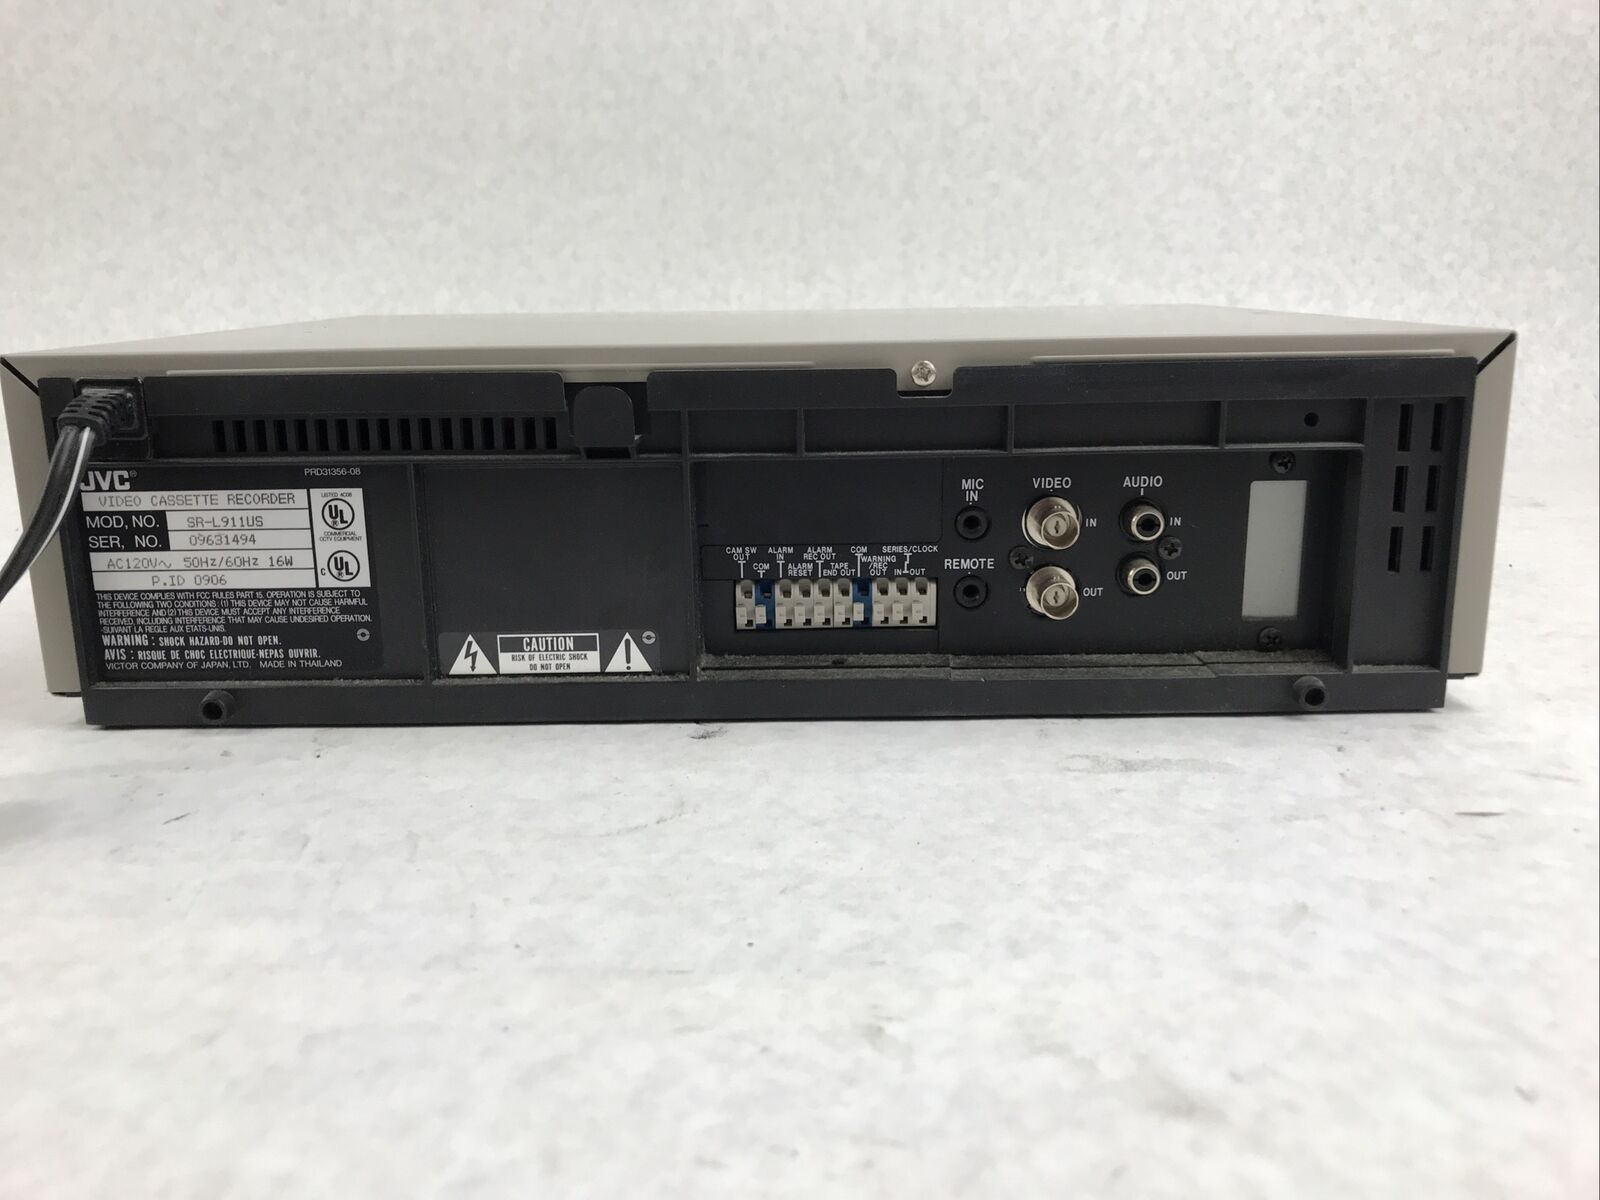 JVC Video Cassette Recorder SR-L911US AC120V 50/60Hz 16W